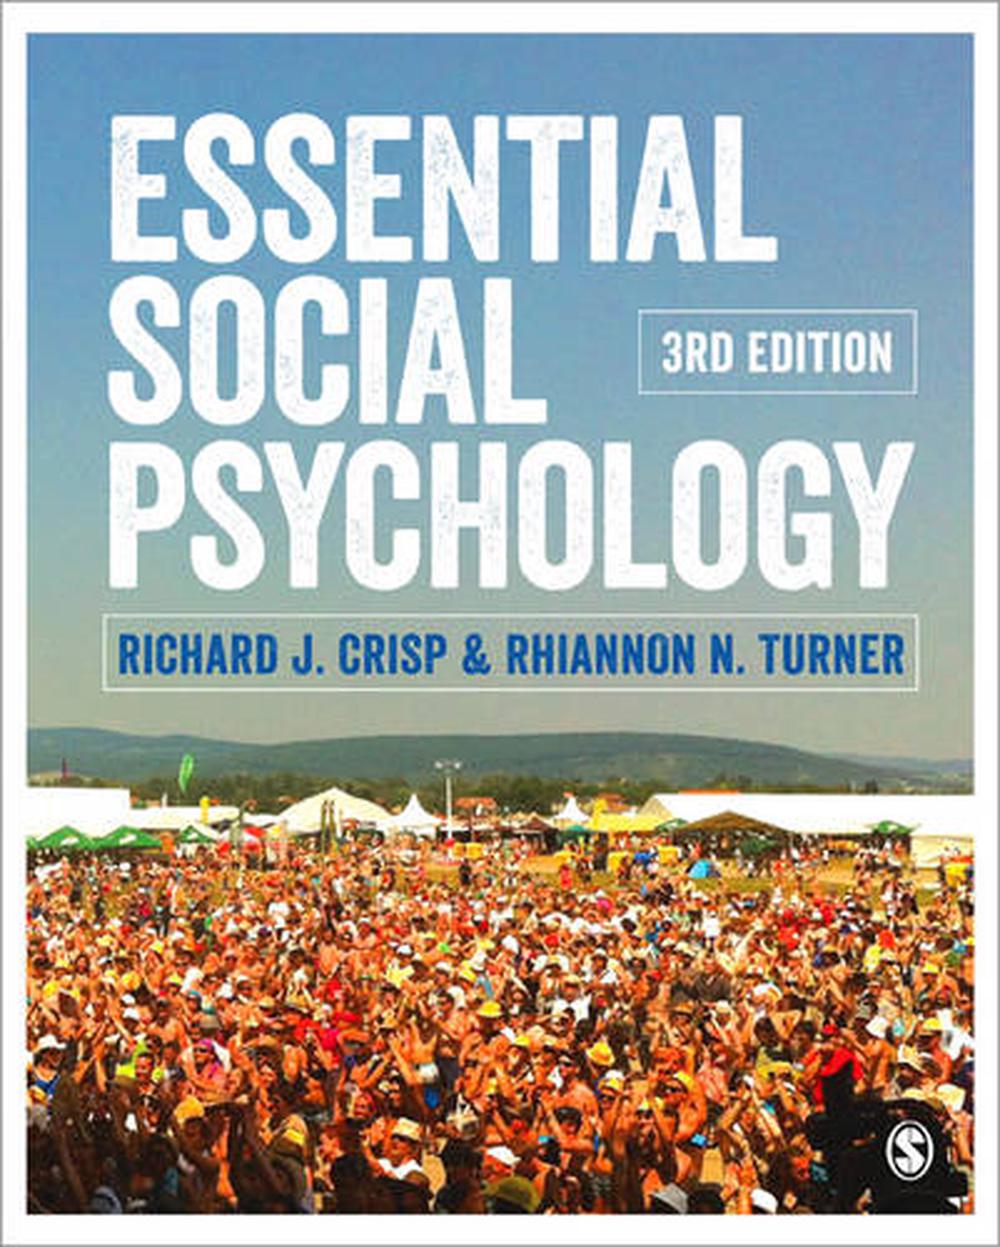 Essential Social Psychology, 3rd edition